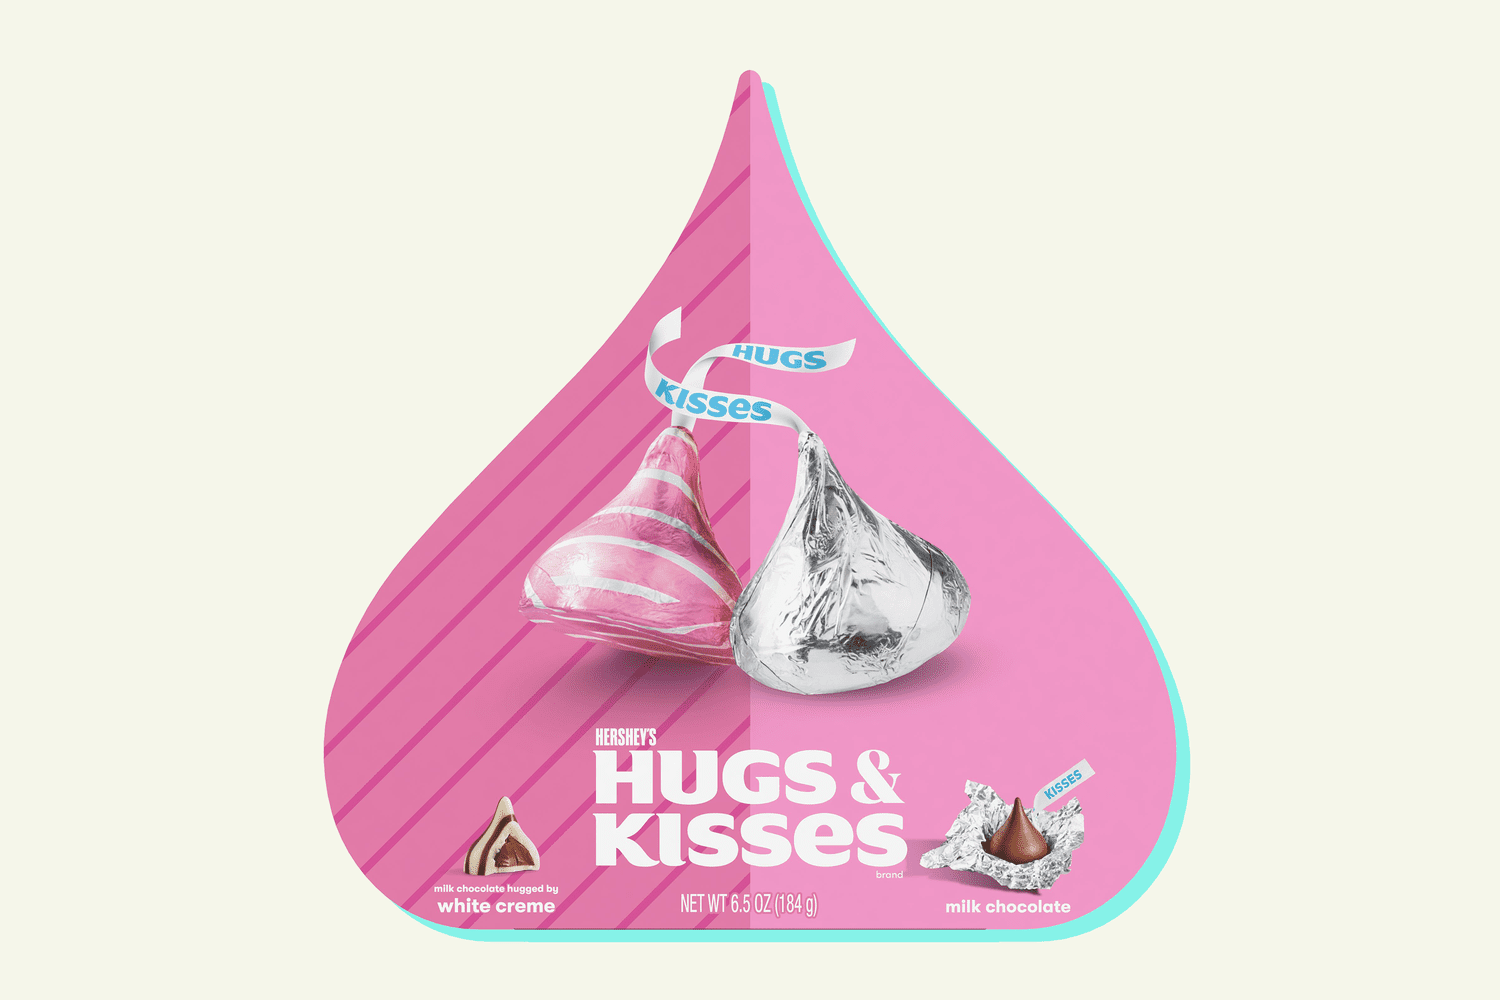 hershey's hugs and kisses box